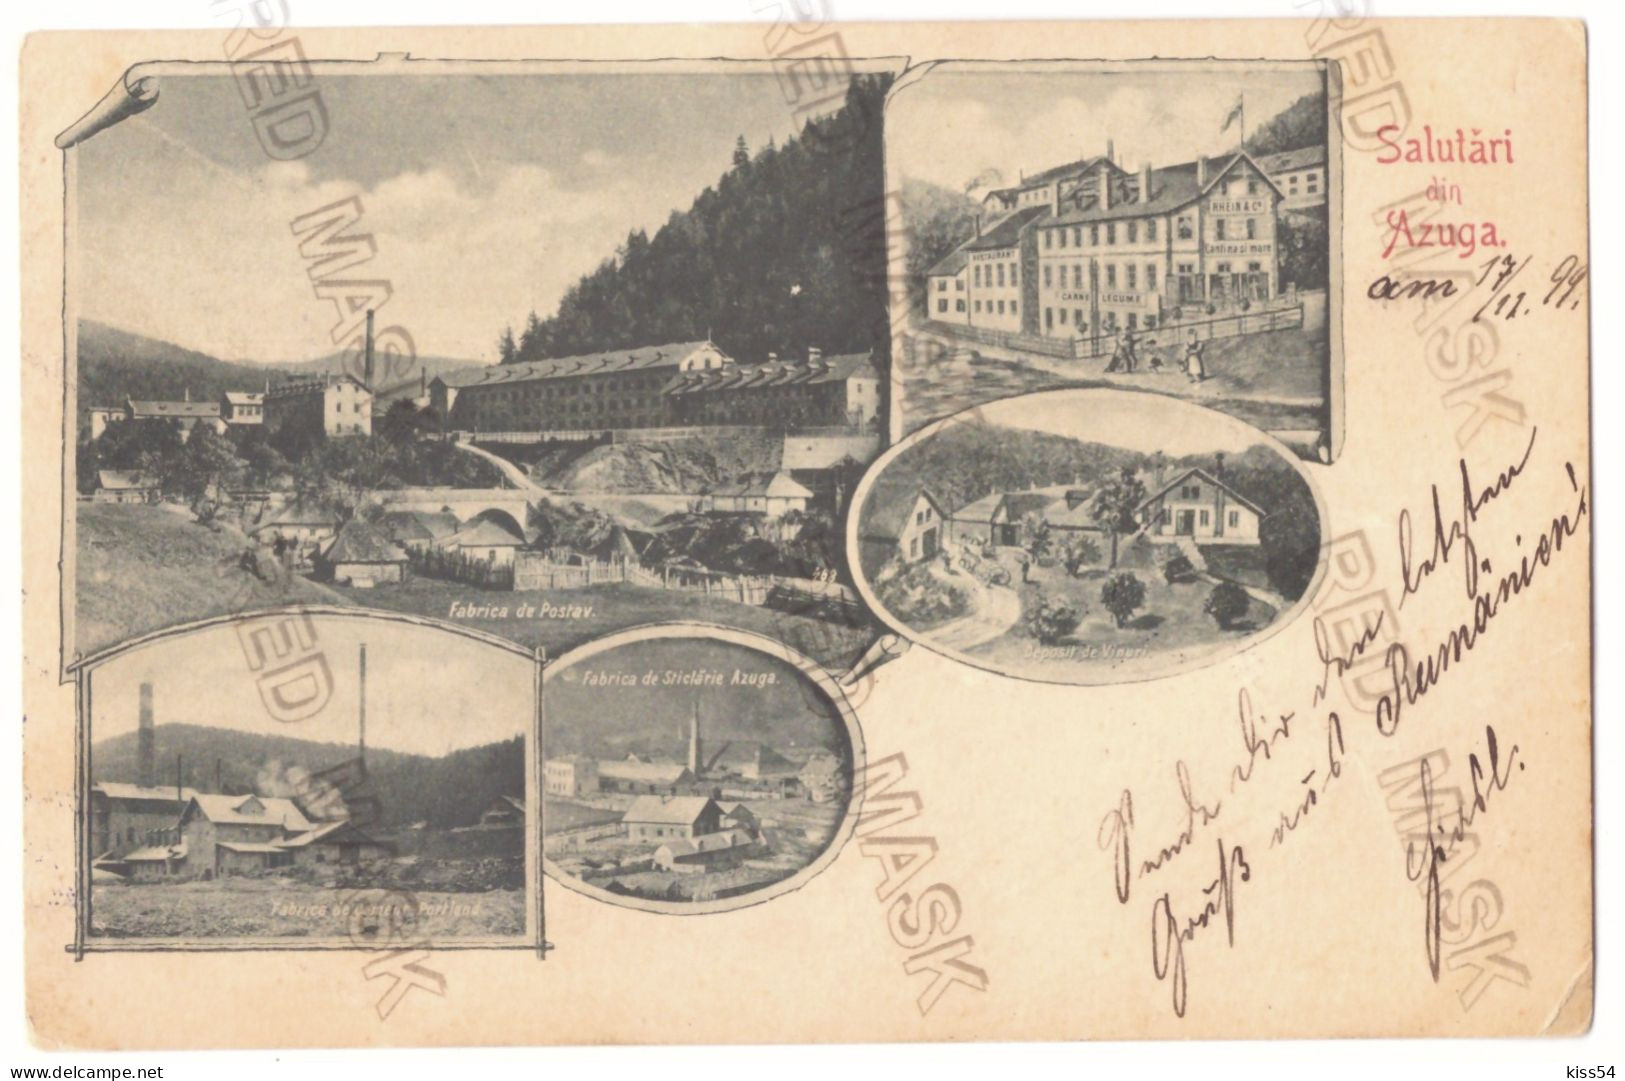 RO - 25401 AZUGA, Prahova, Litho, Romania - Old Postcard - Used - 1899 - Roumanie